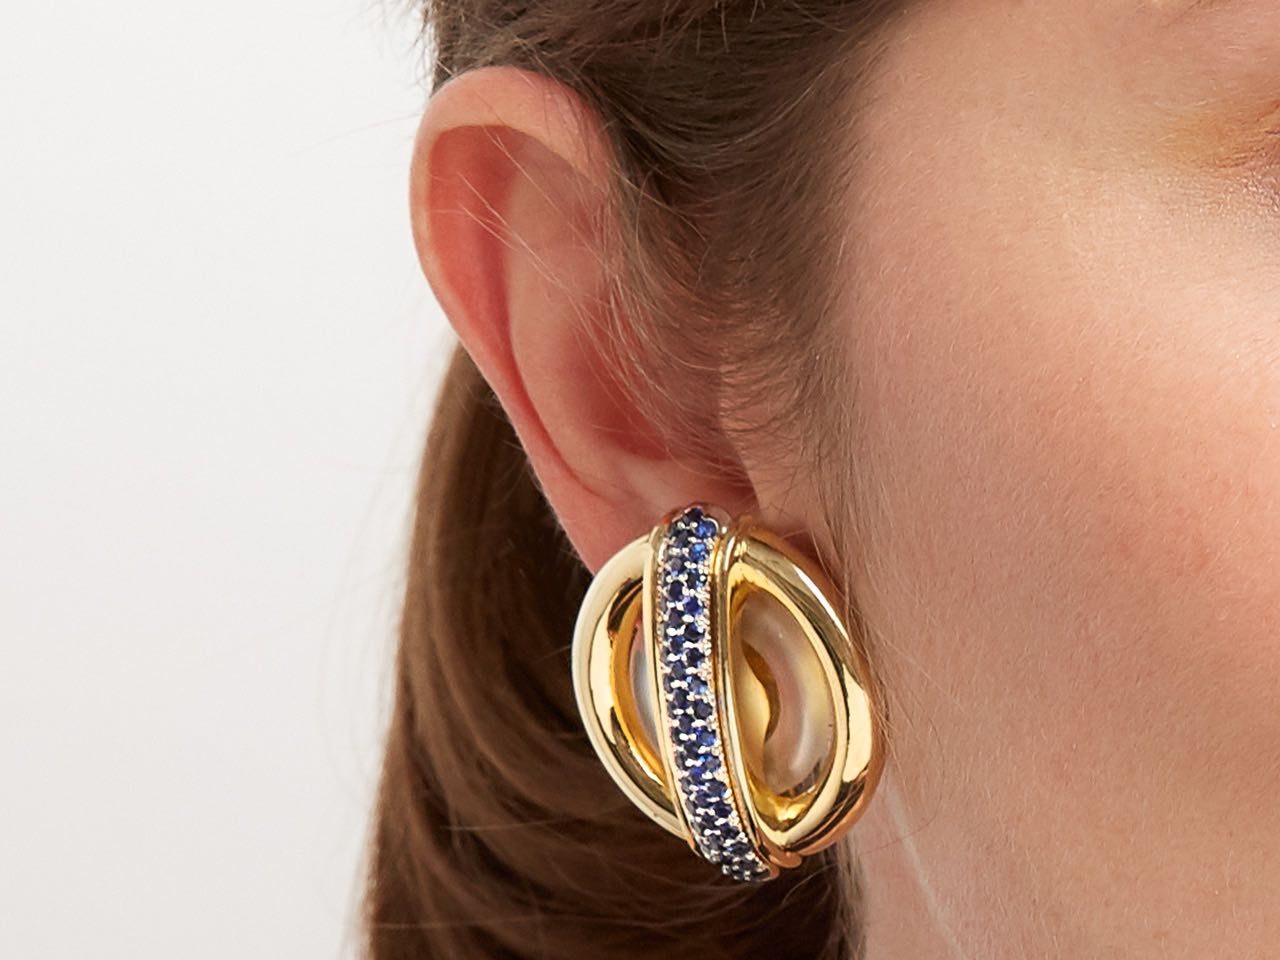 Cartier Aldo Cipullo Sapphire Circles Earrings in 18K